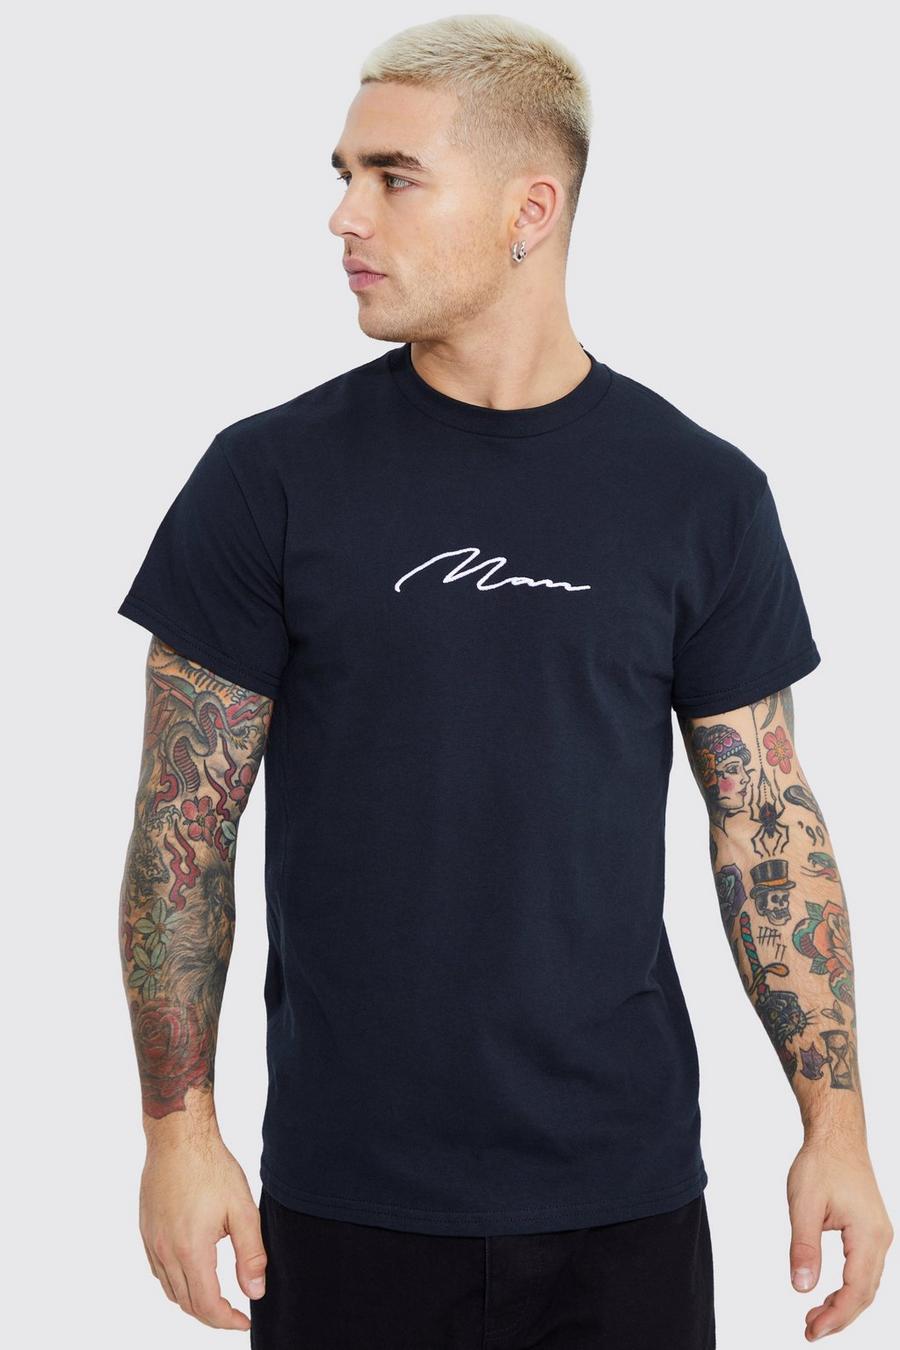 T-shirt con firma Man e ricami, Black nero